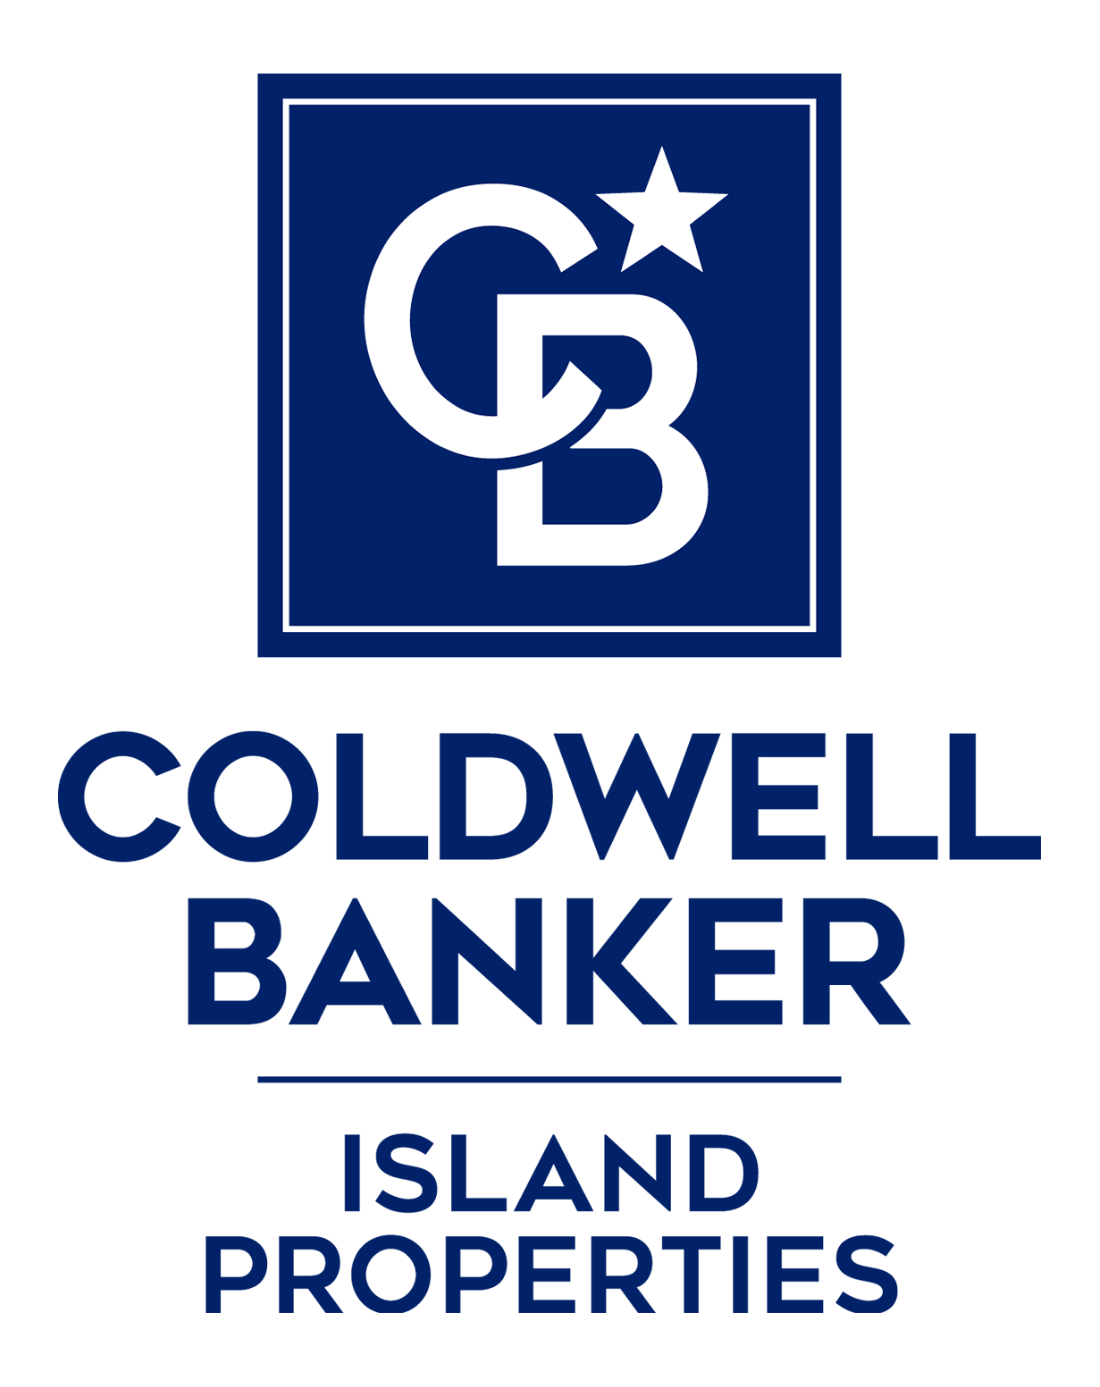 Steve Baker - Coldwell Banker Island Properties Logo